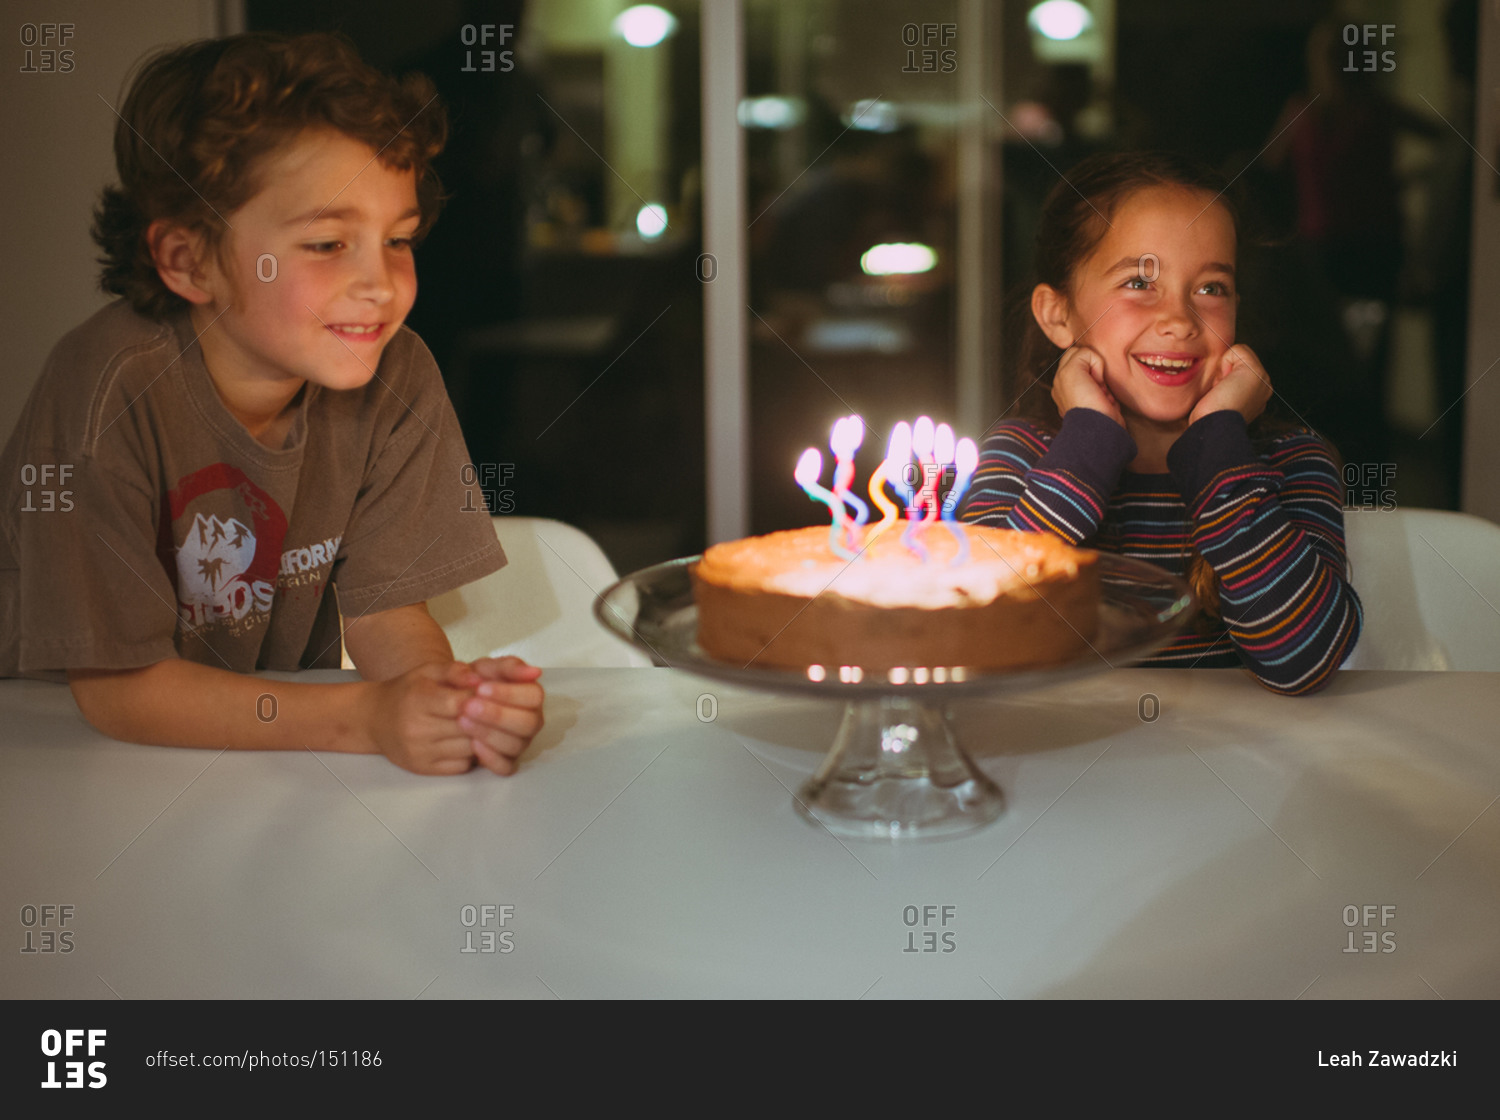 Children celebrating their birthday